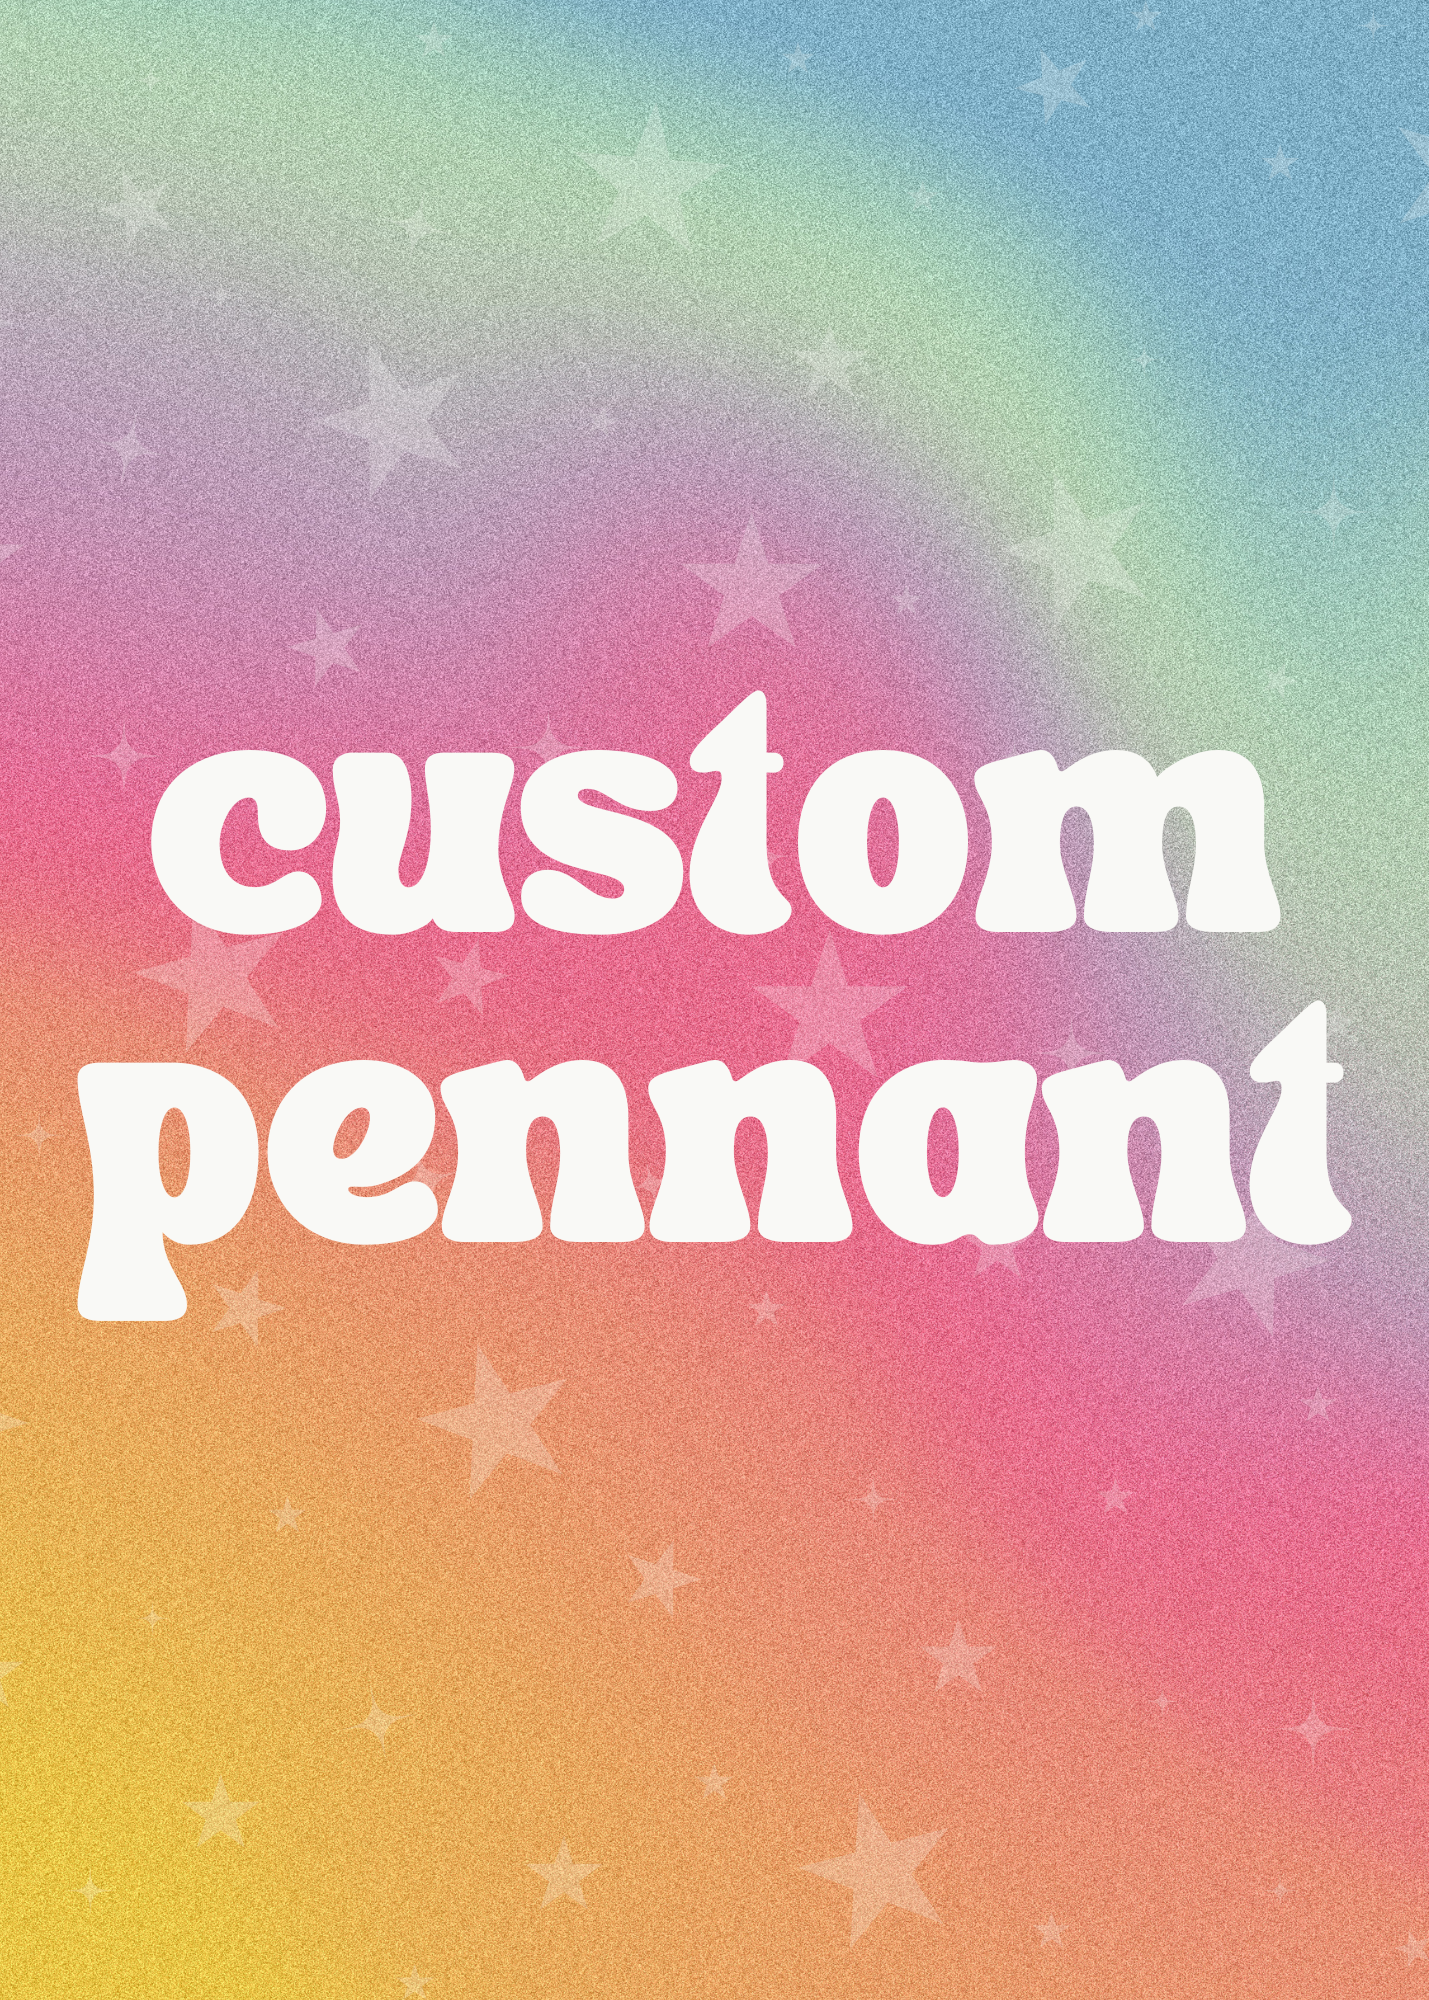 *PRE-ORDER* custom pennant